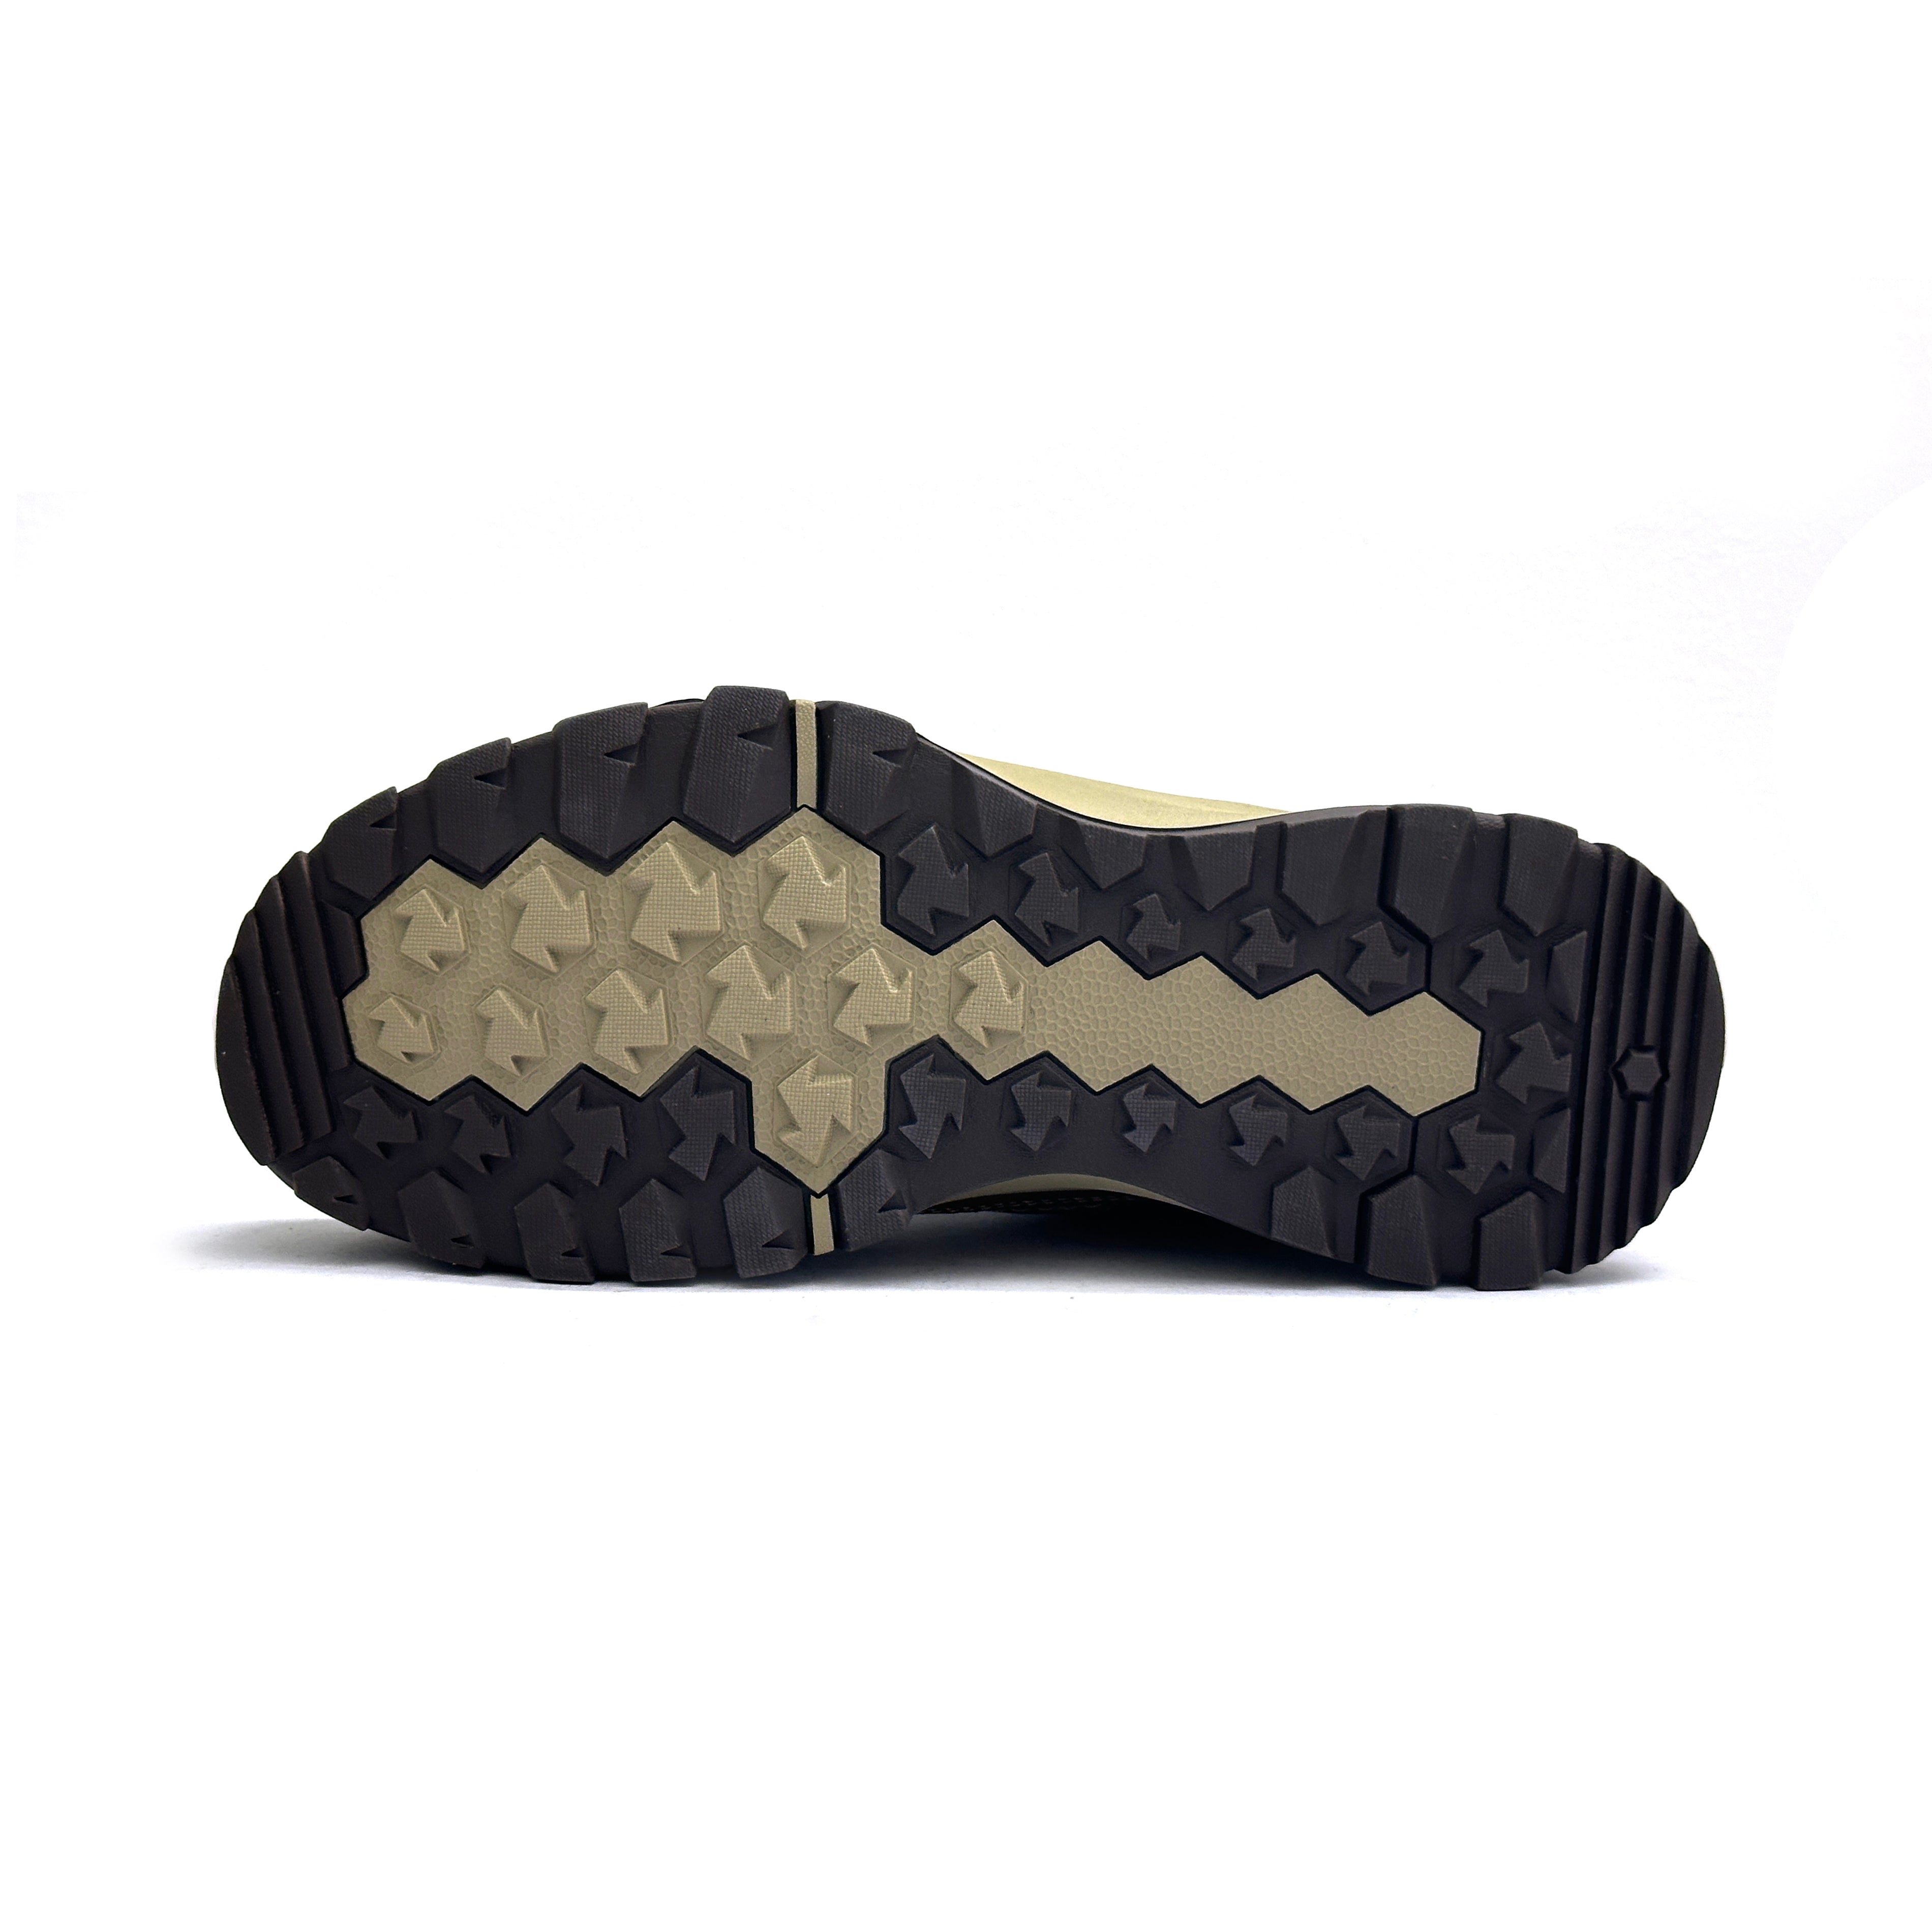 26090-camel Premium causal shoes For Men